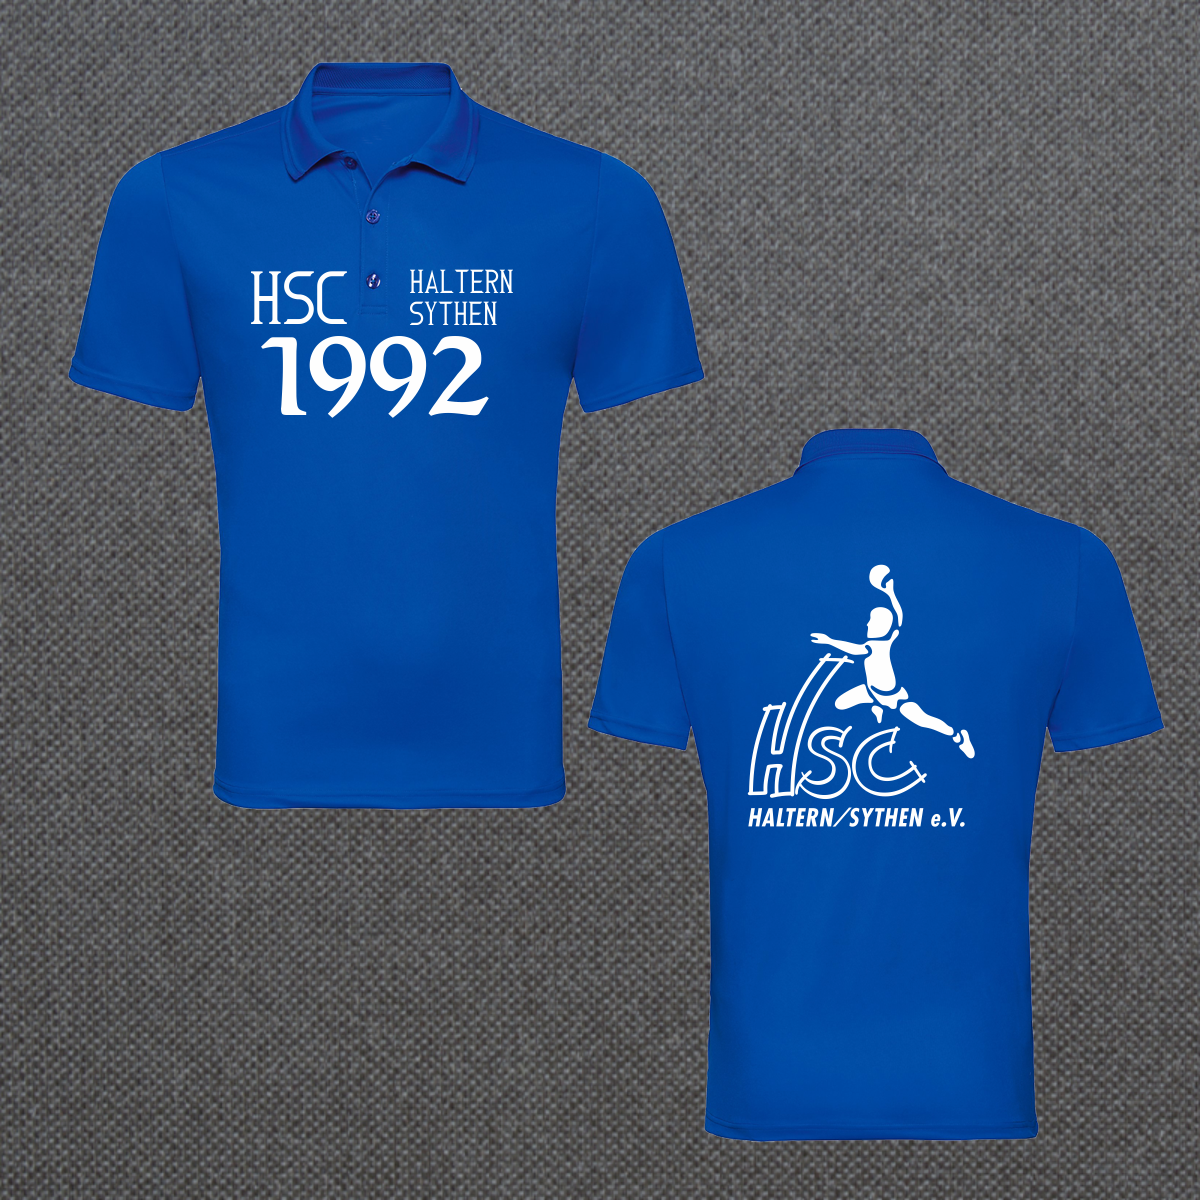 HSC Haltern/Sythen e.V. - 1992 Poloshirt